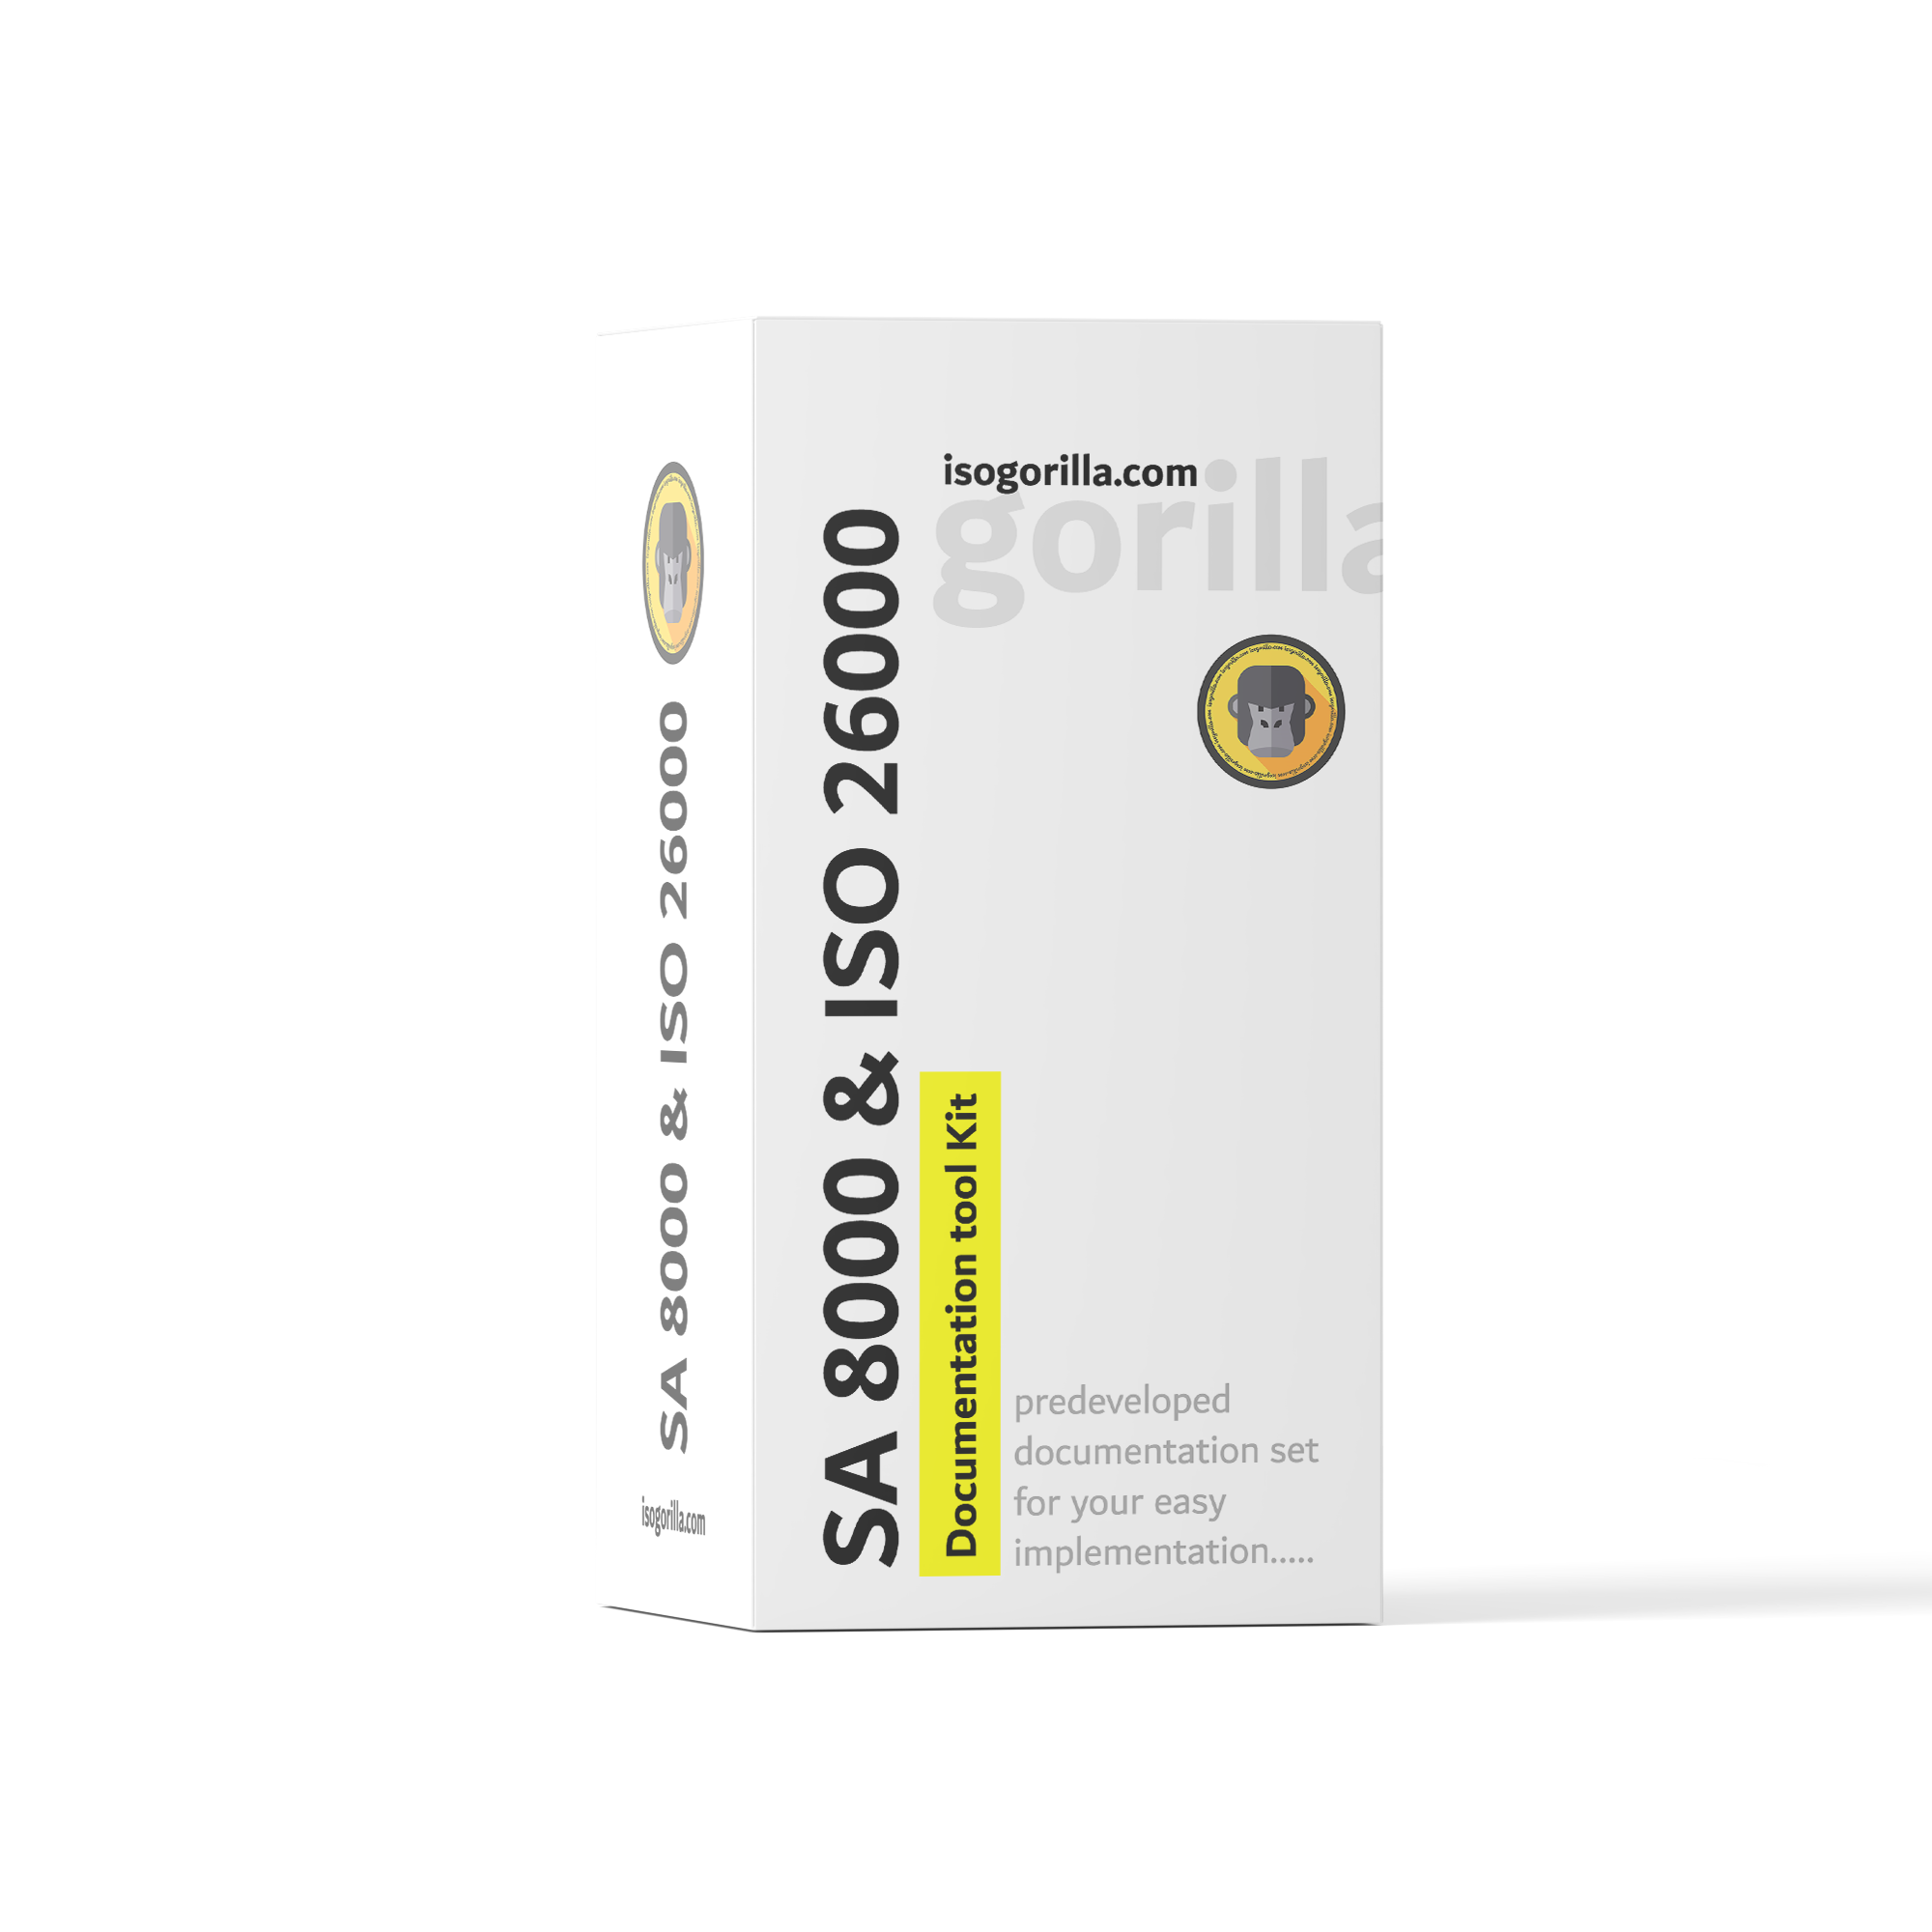 isogorilla.com SA 8000 and ISO 26000 documentation toolkit